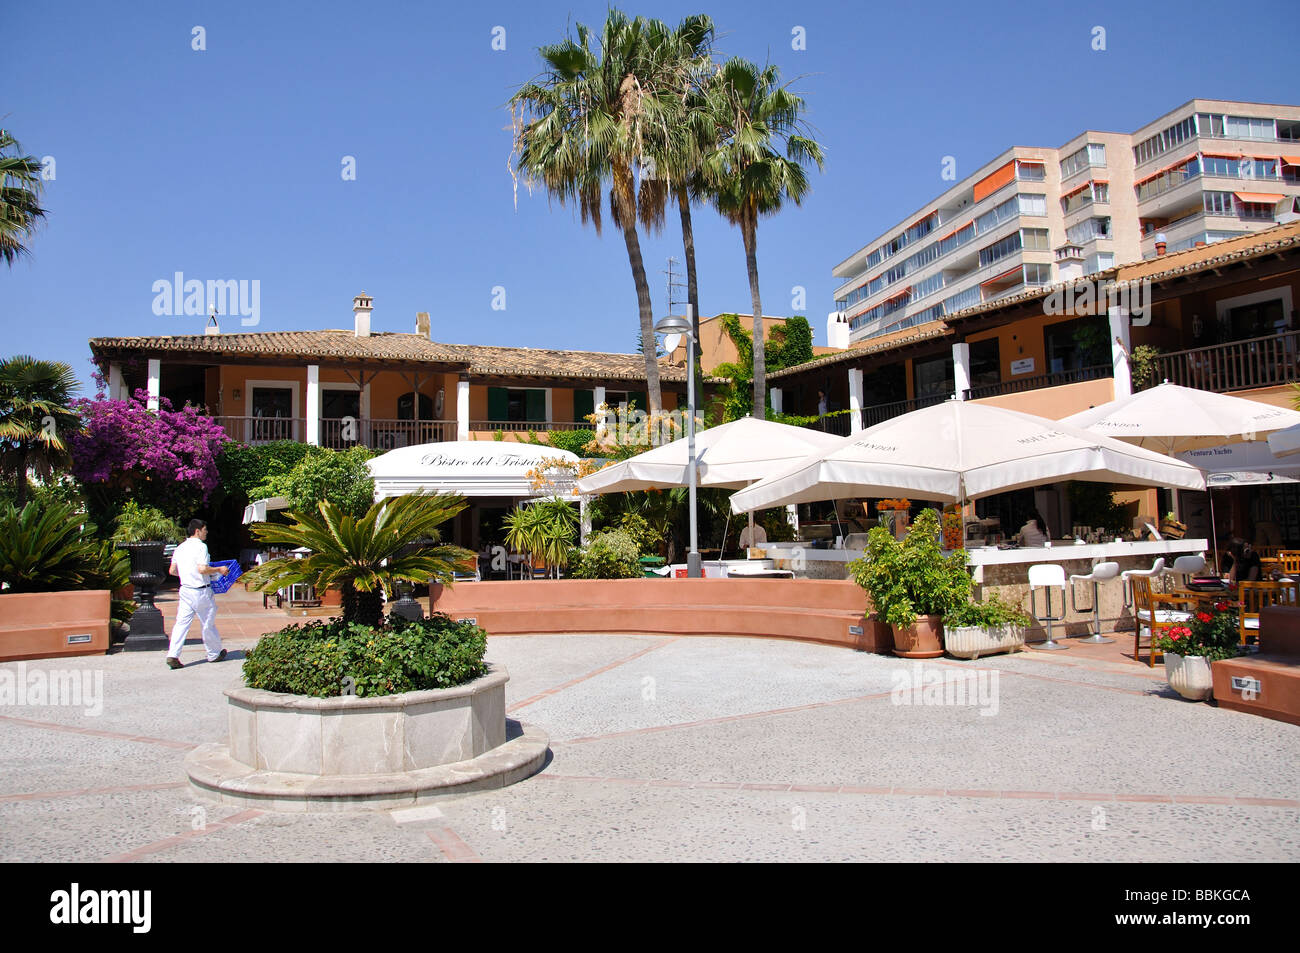 Restaurant im Freien, Puerto Portals, Portals Nous / Bendinat, Mallorca, Balearen, Spanien Stockfoto